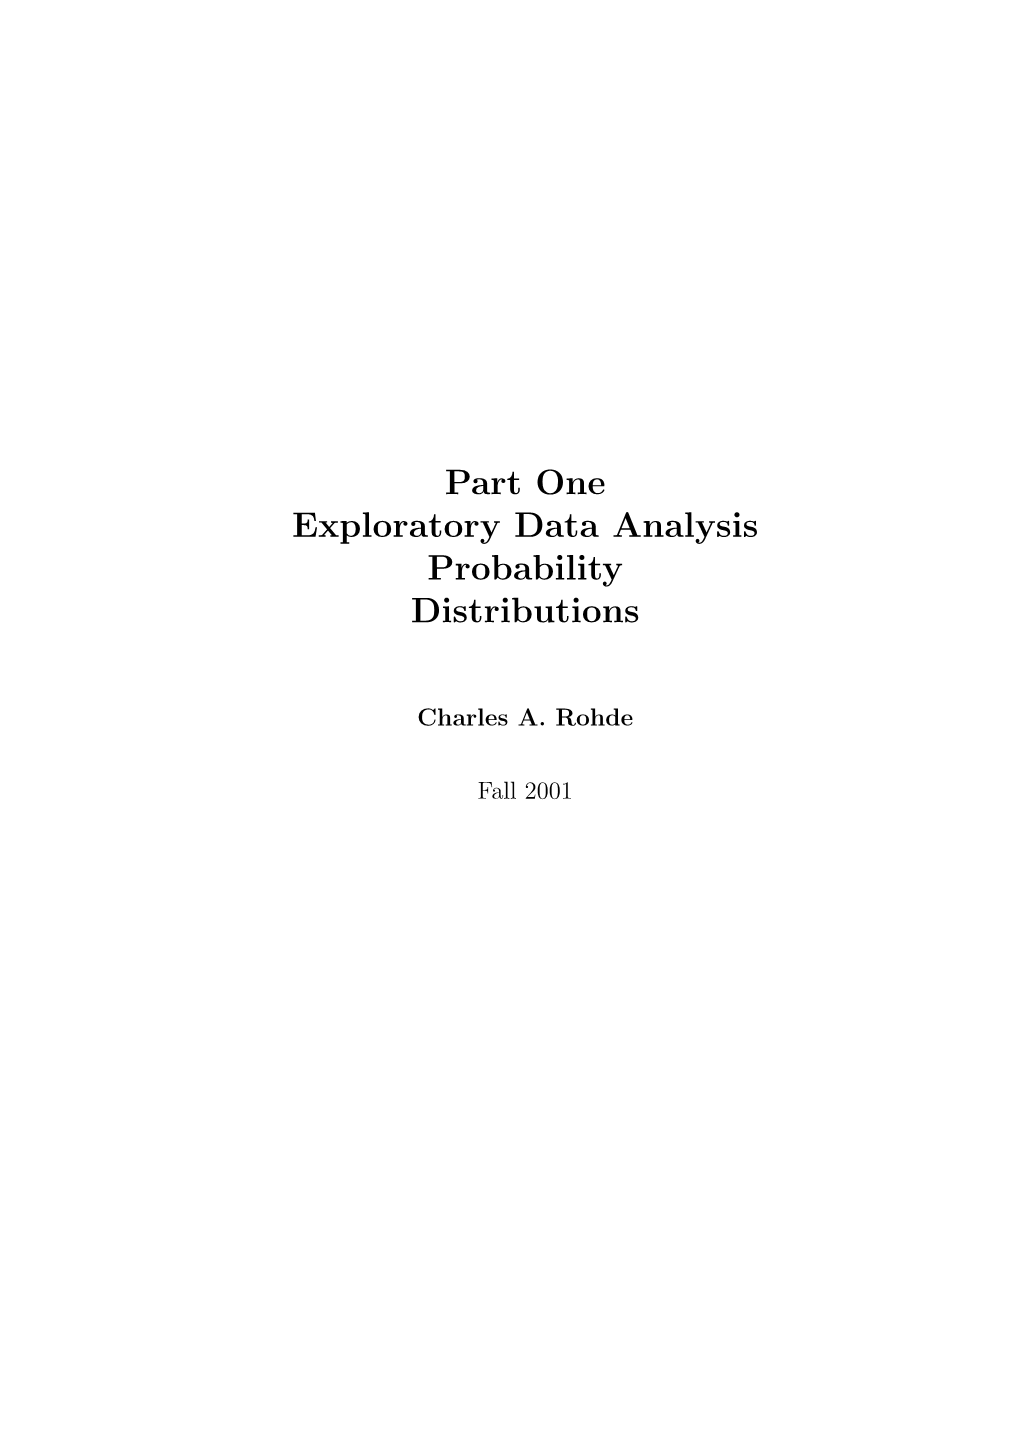 Part One Exploratory Data Analysis Probability Distributions